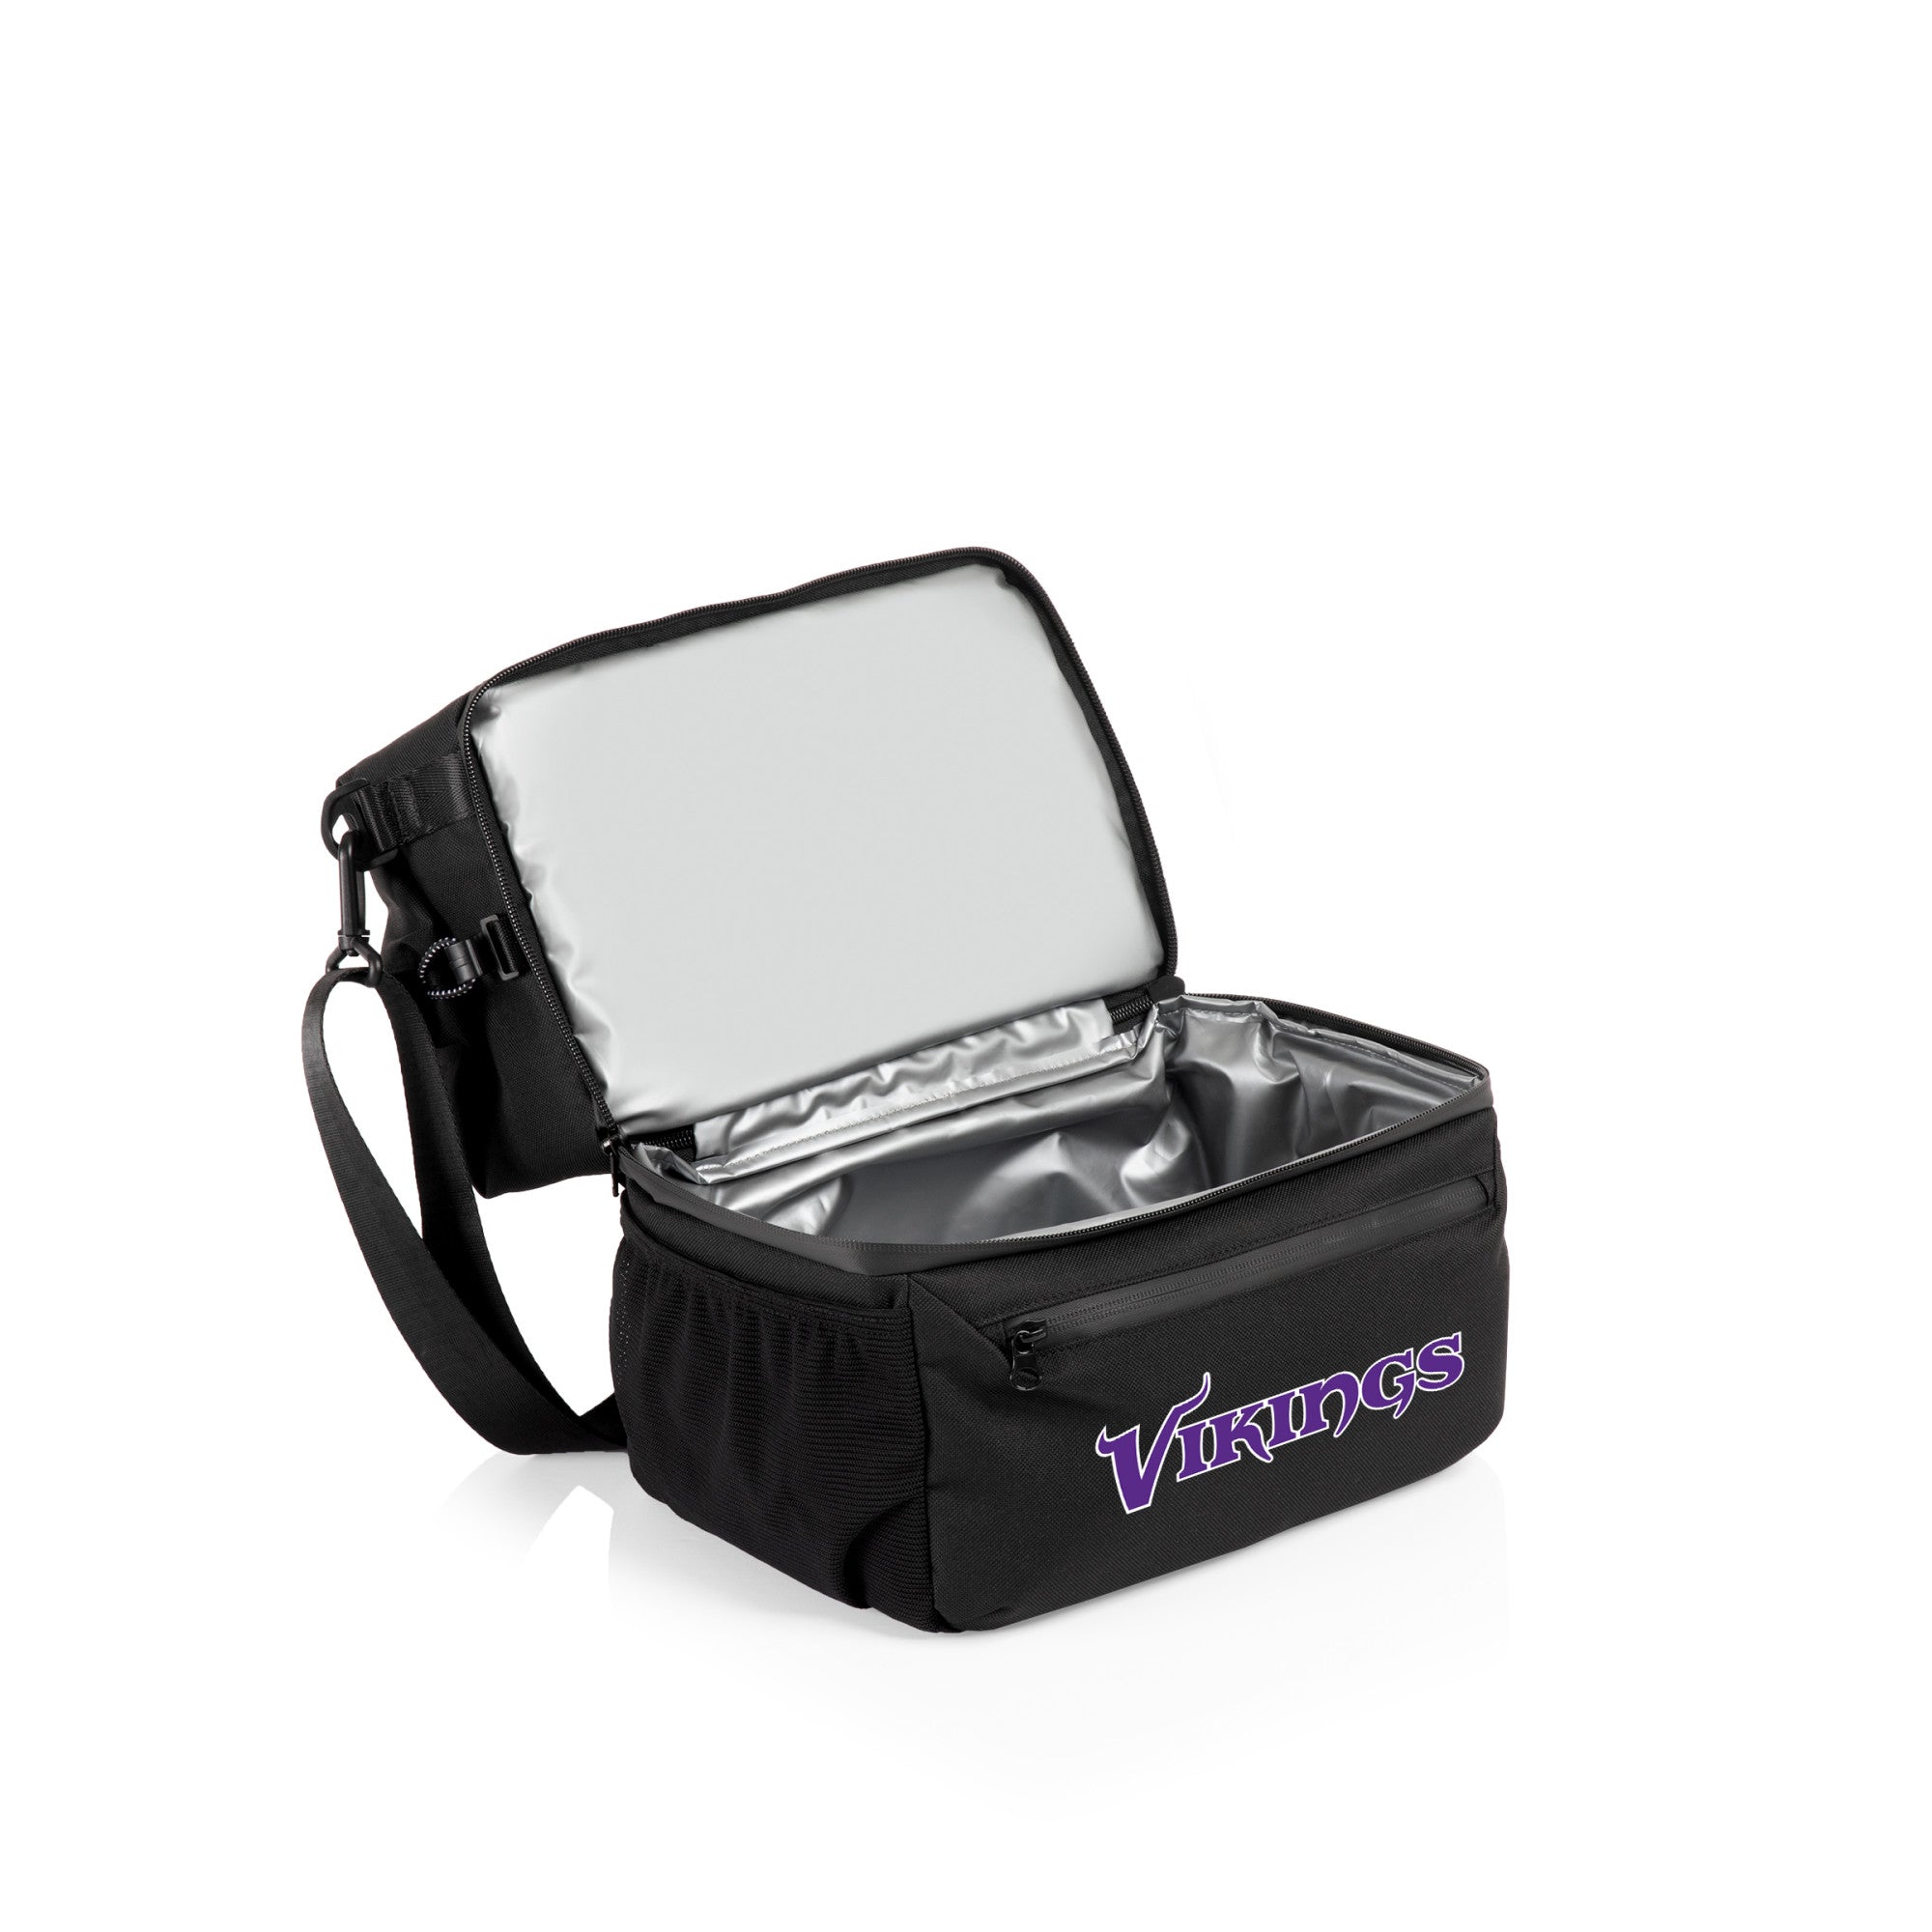 Minnesota Vikings - Tarana Lunch Bag Cooler with Utensils